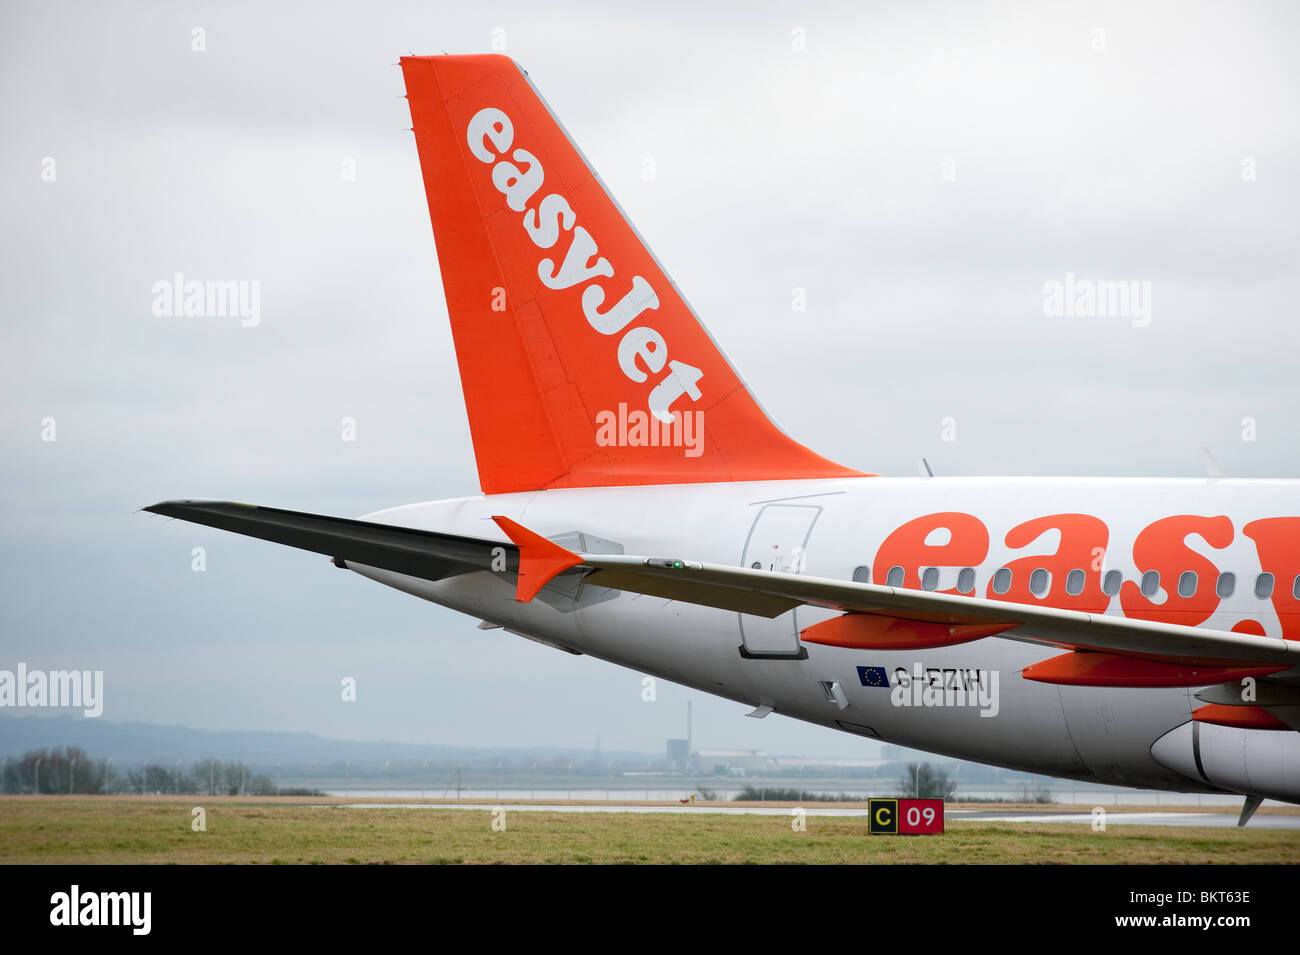 Easyjet plane tail fin and Logo Stock Photo